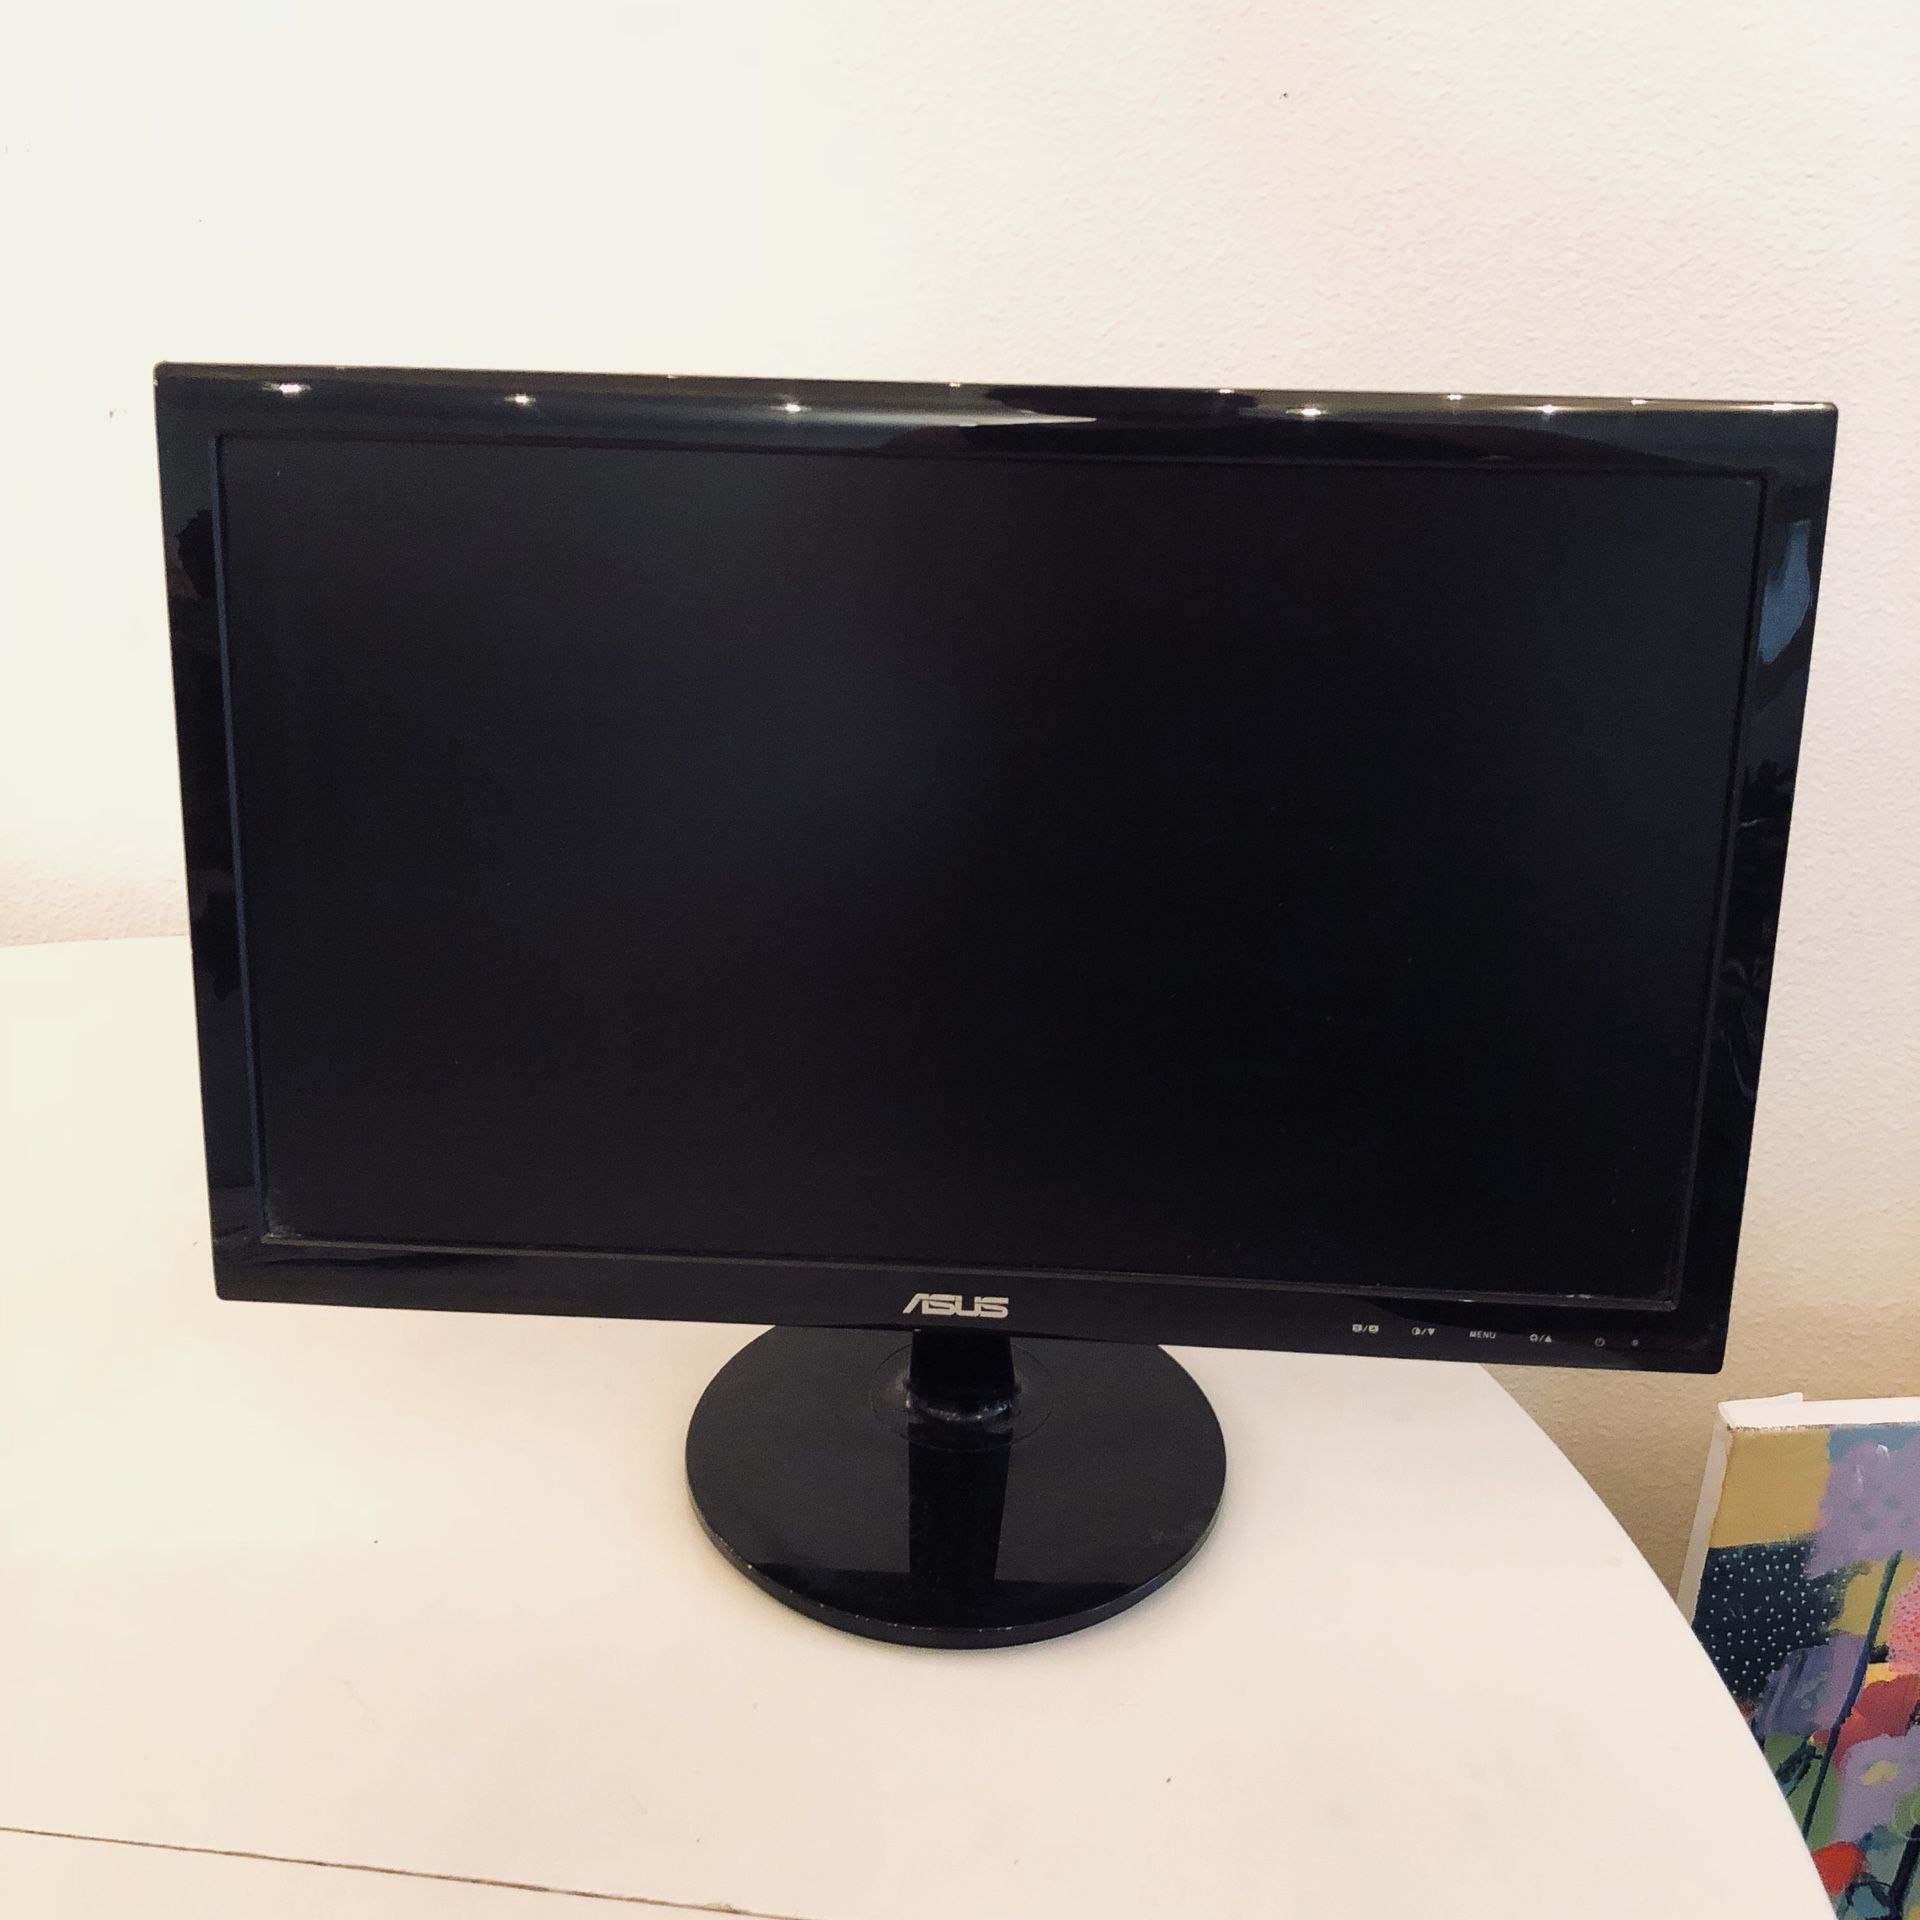 ASUS VS208N-P Black 20inch computer monitor